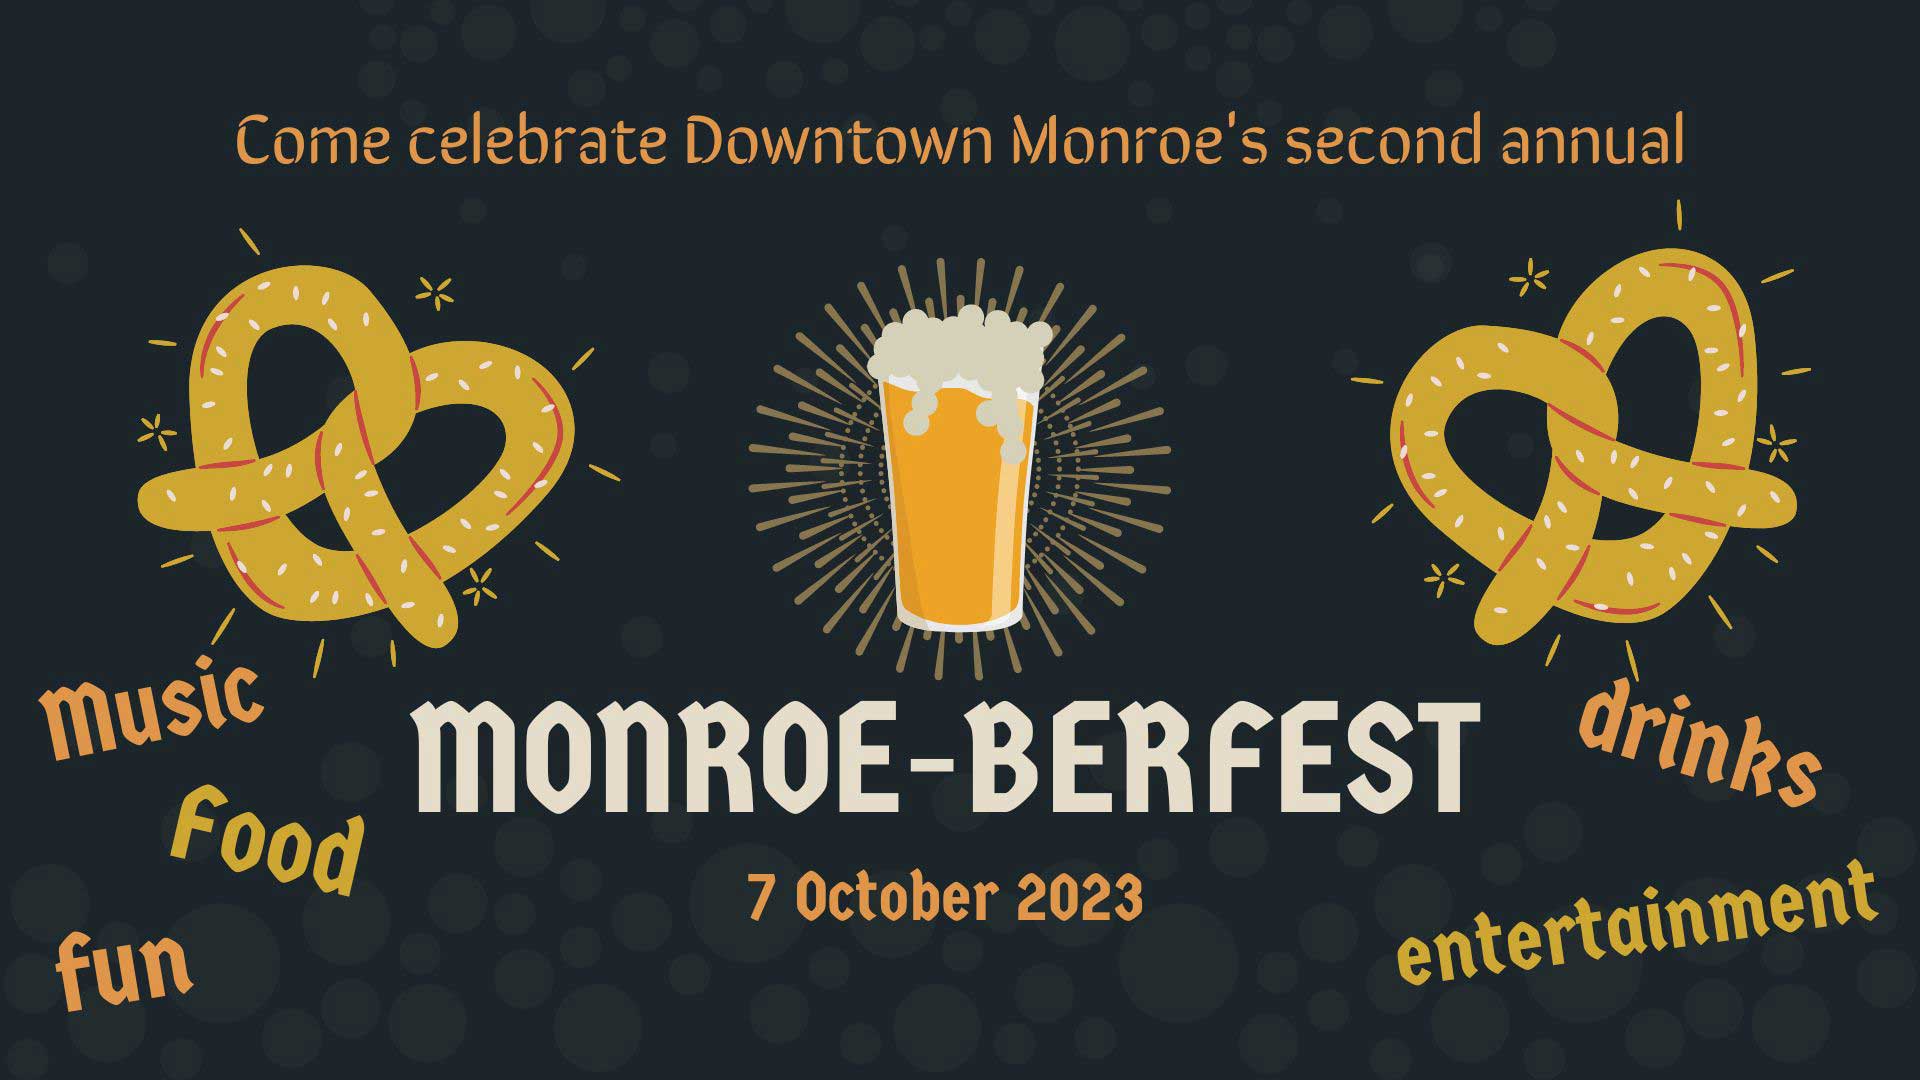 Second Annual Monroe-berfest